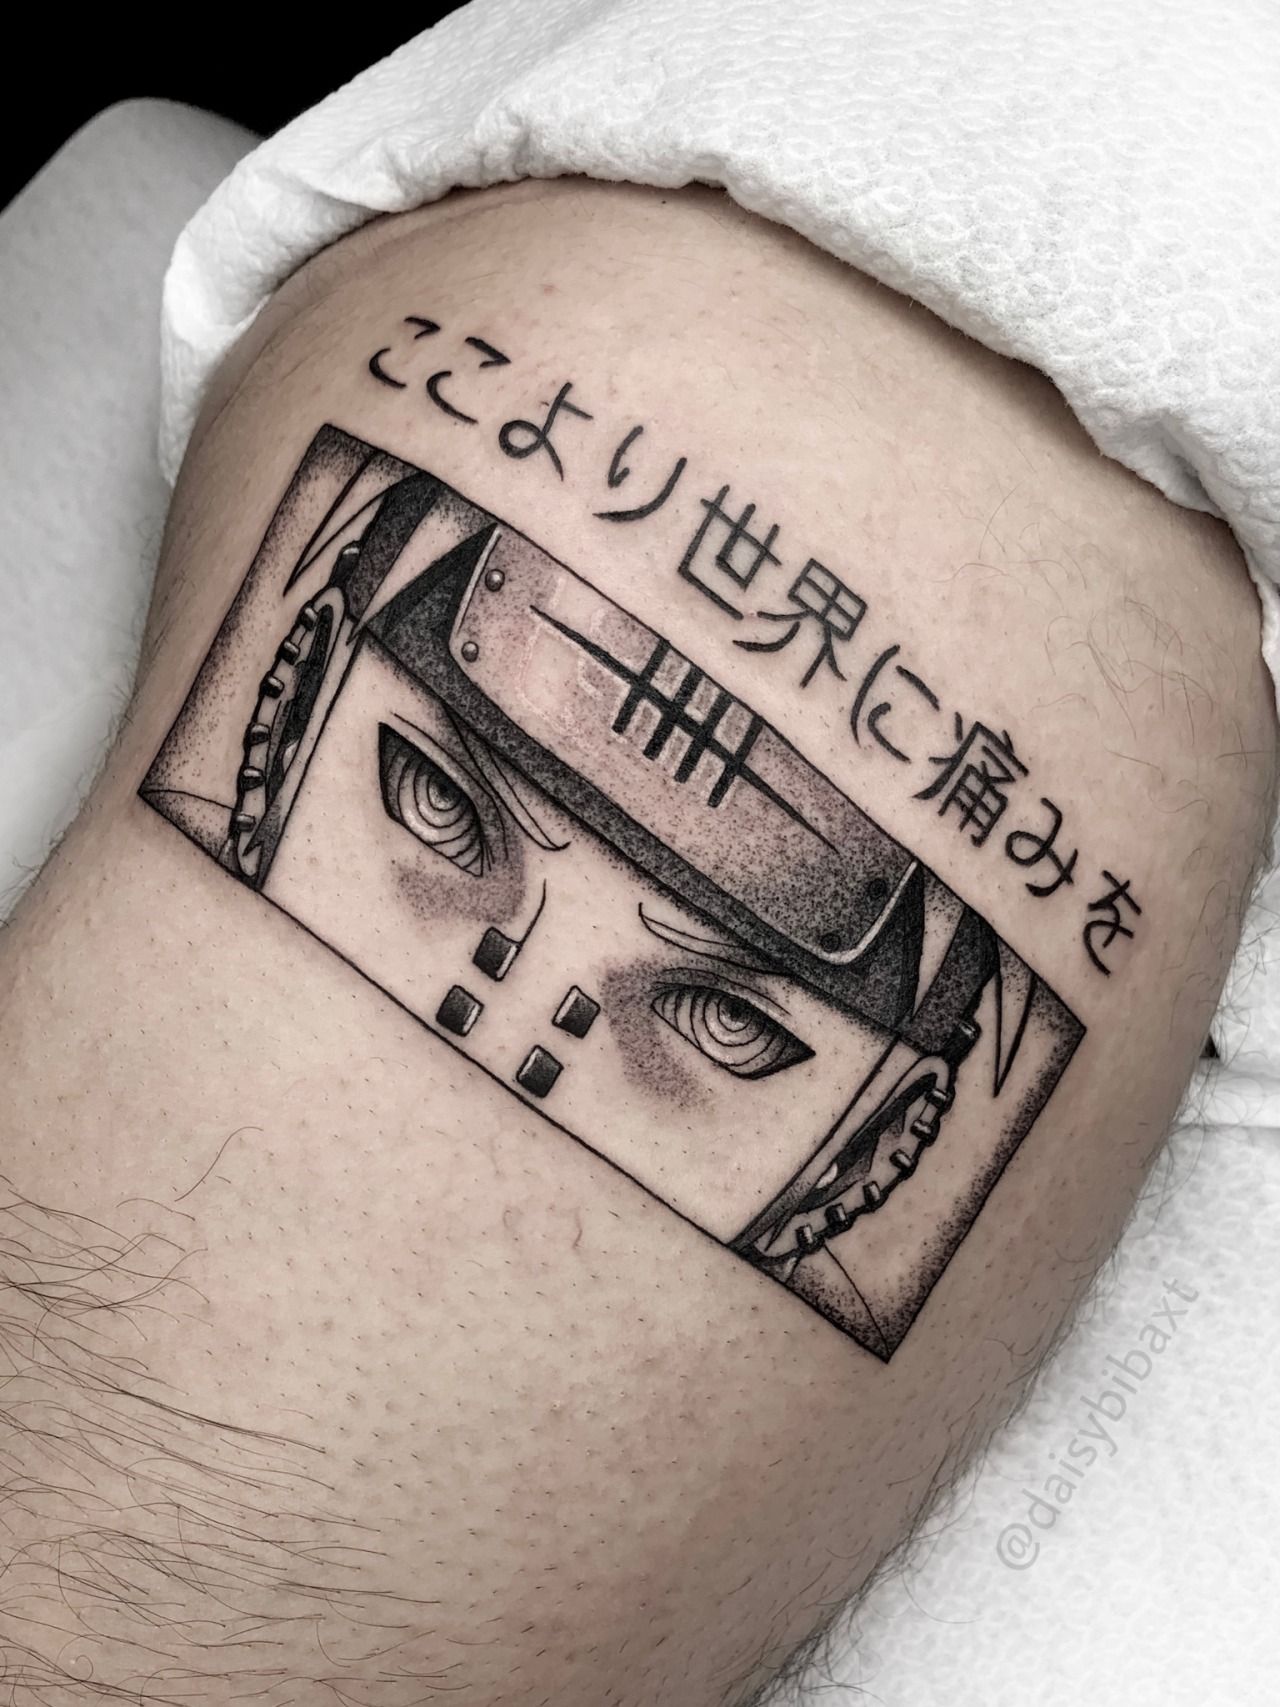 Anime tattoo by Richie Rich by Rixhie Rixh: TattooNOW